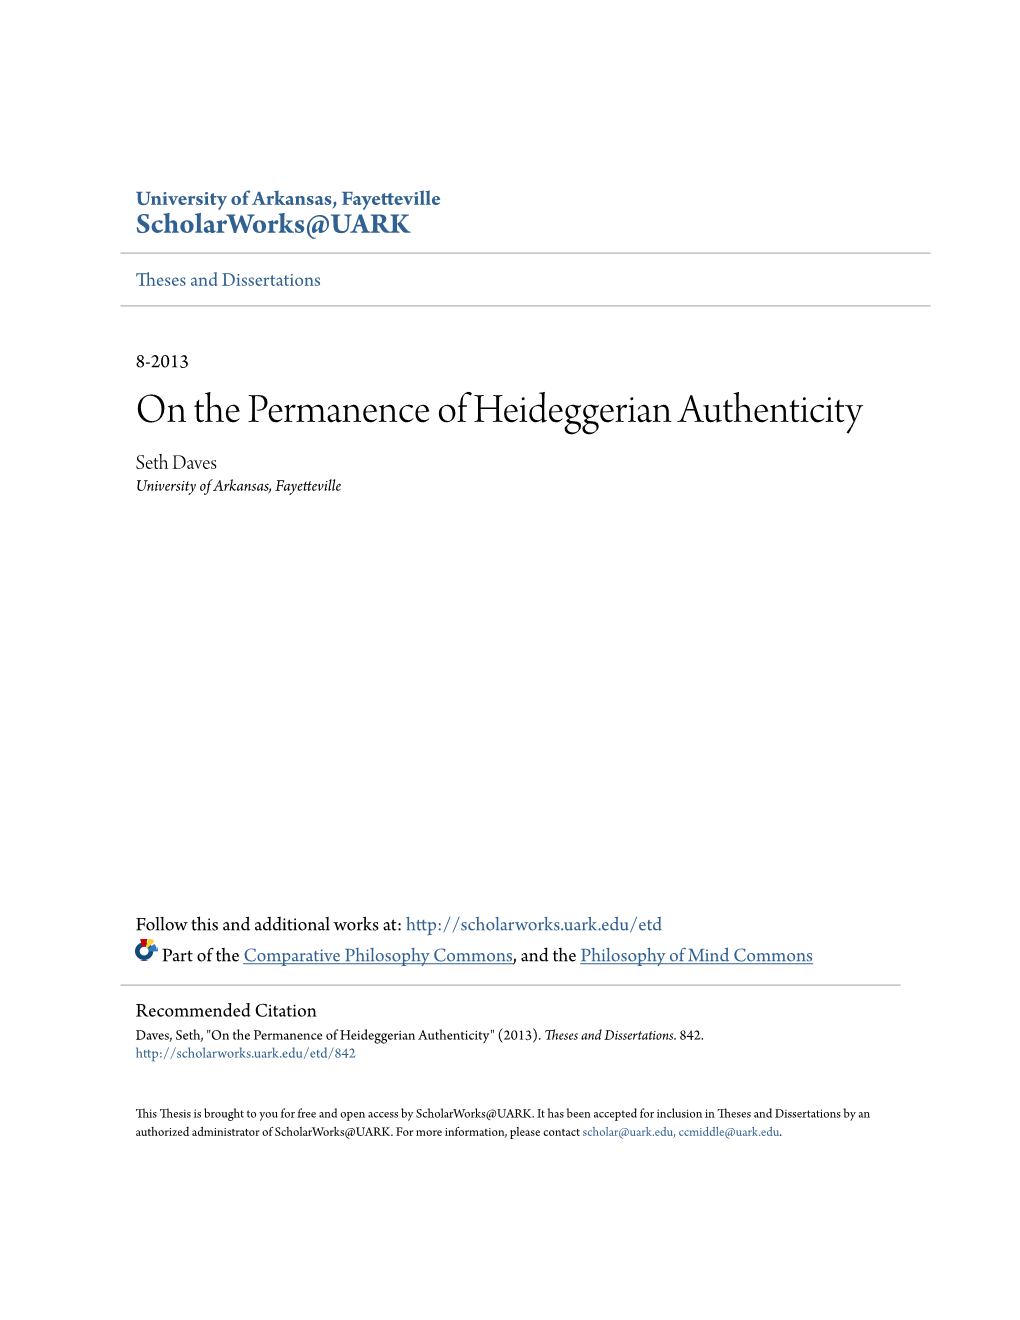 On the Permanence of Heideggerian Authenticity Seth Daves University of Arkansas, Fayetteville